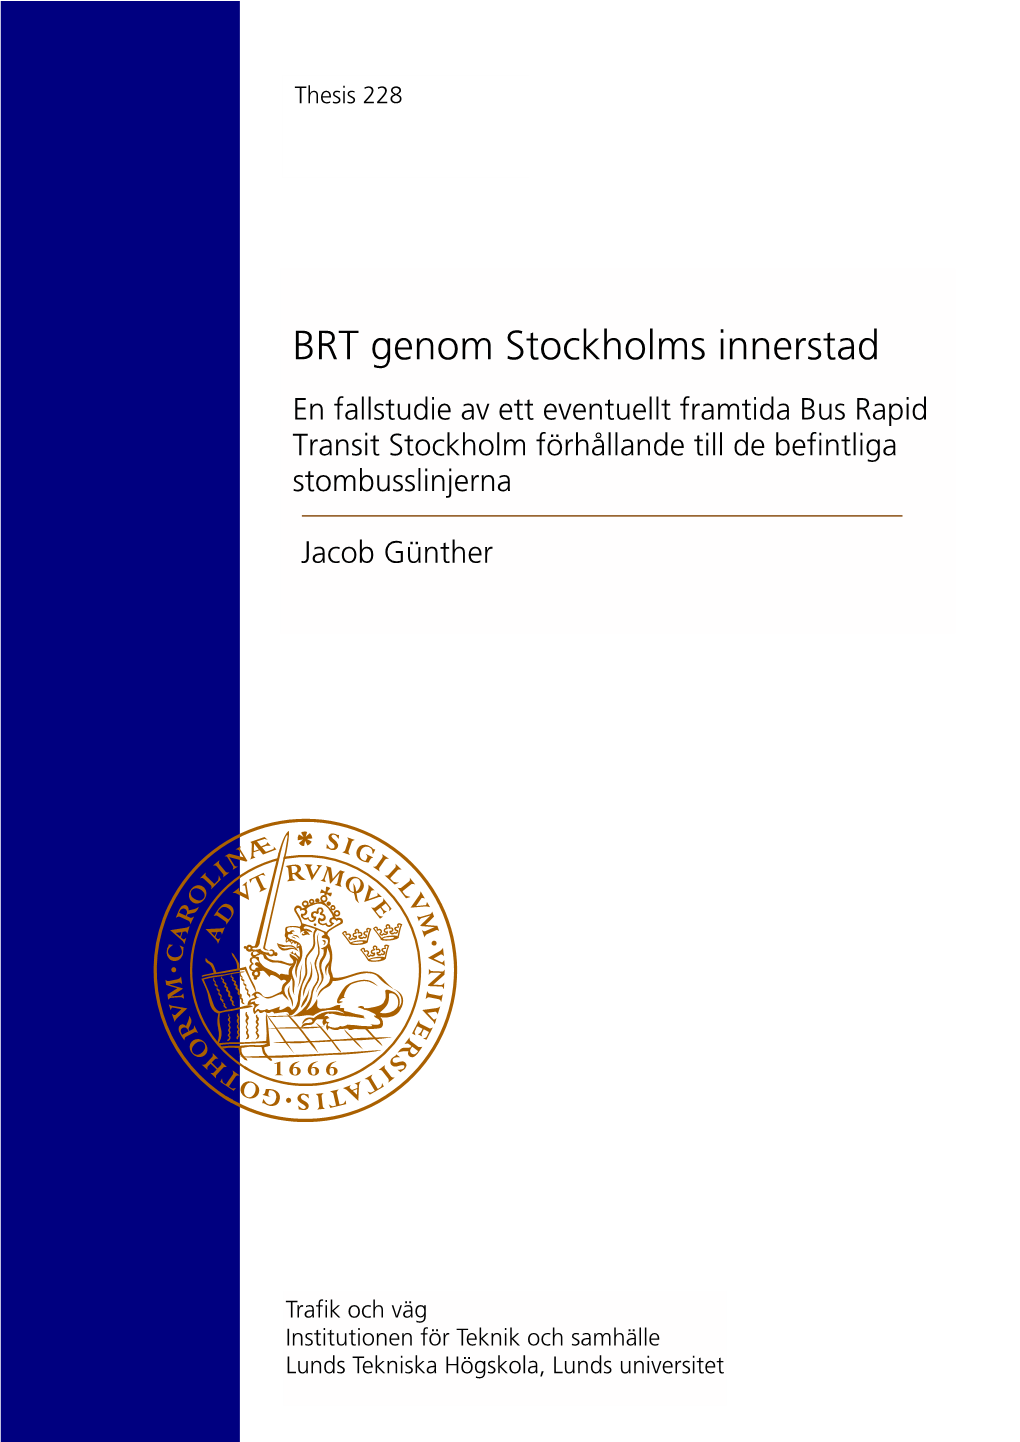 BRT Genom Stockholms Innerstad